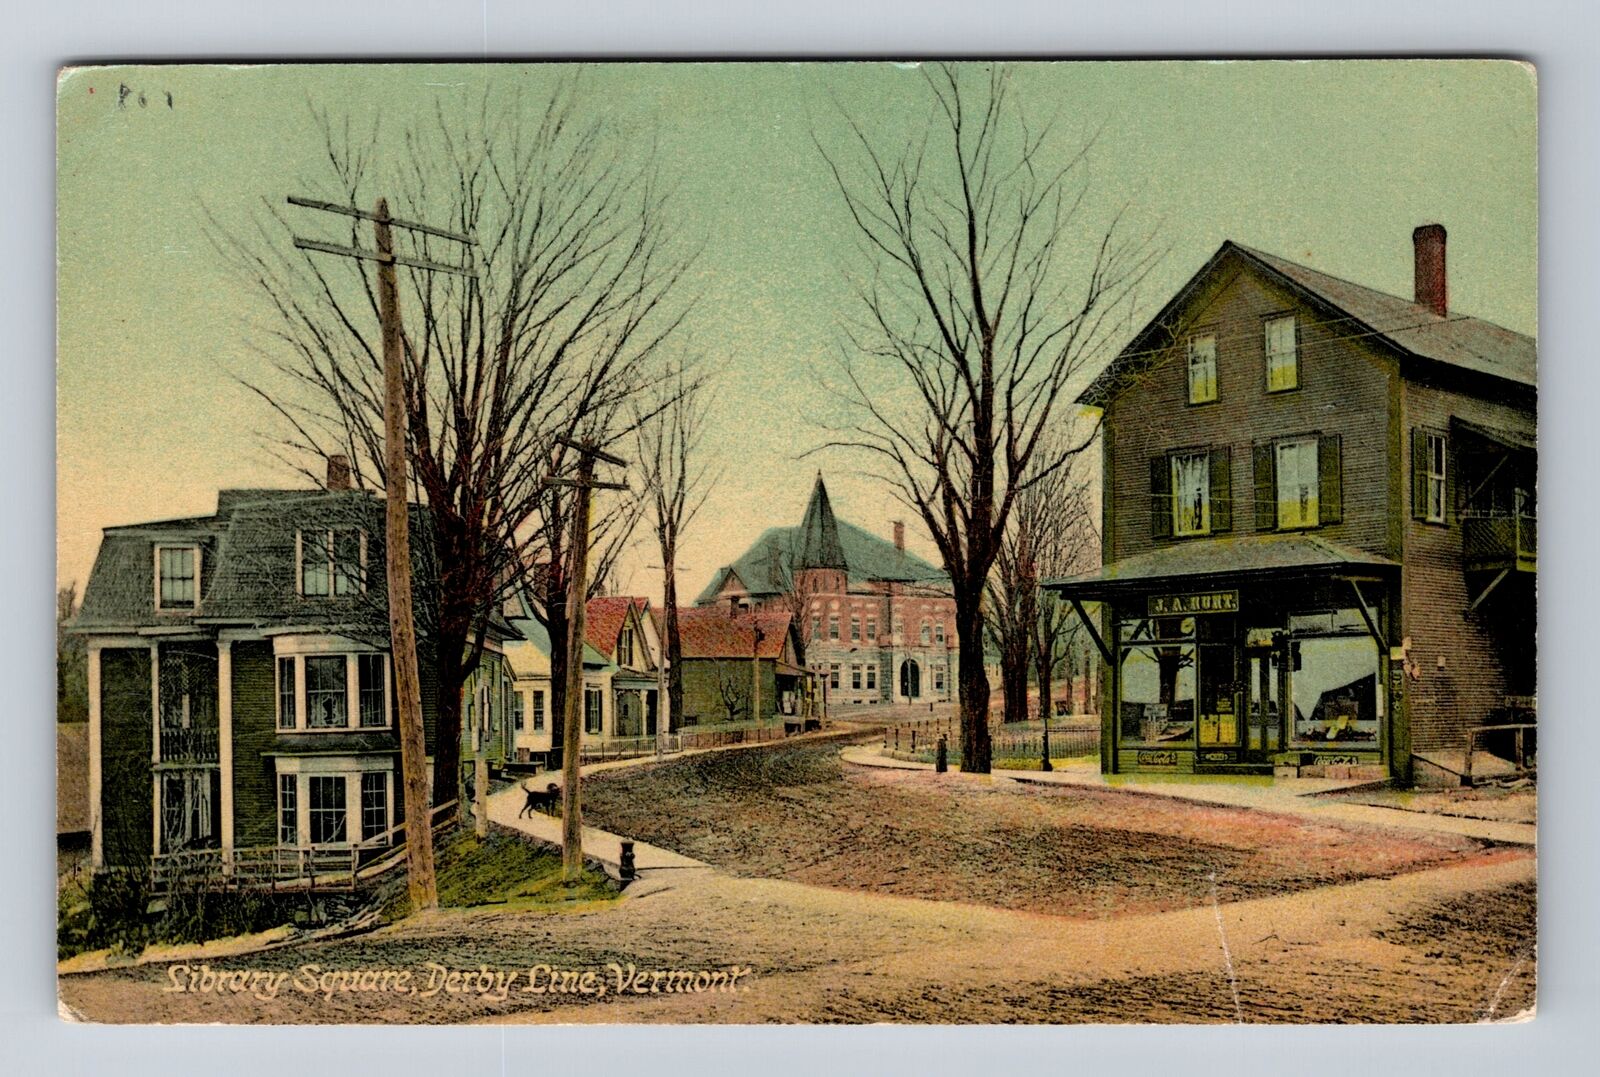 Derby Line VT-Vermont, Library Square, Residences, Antique, Vintage Postcard